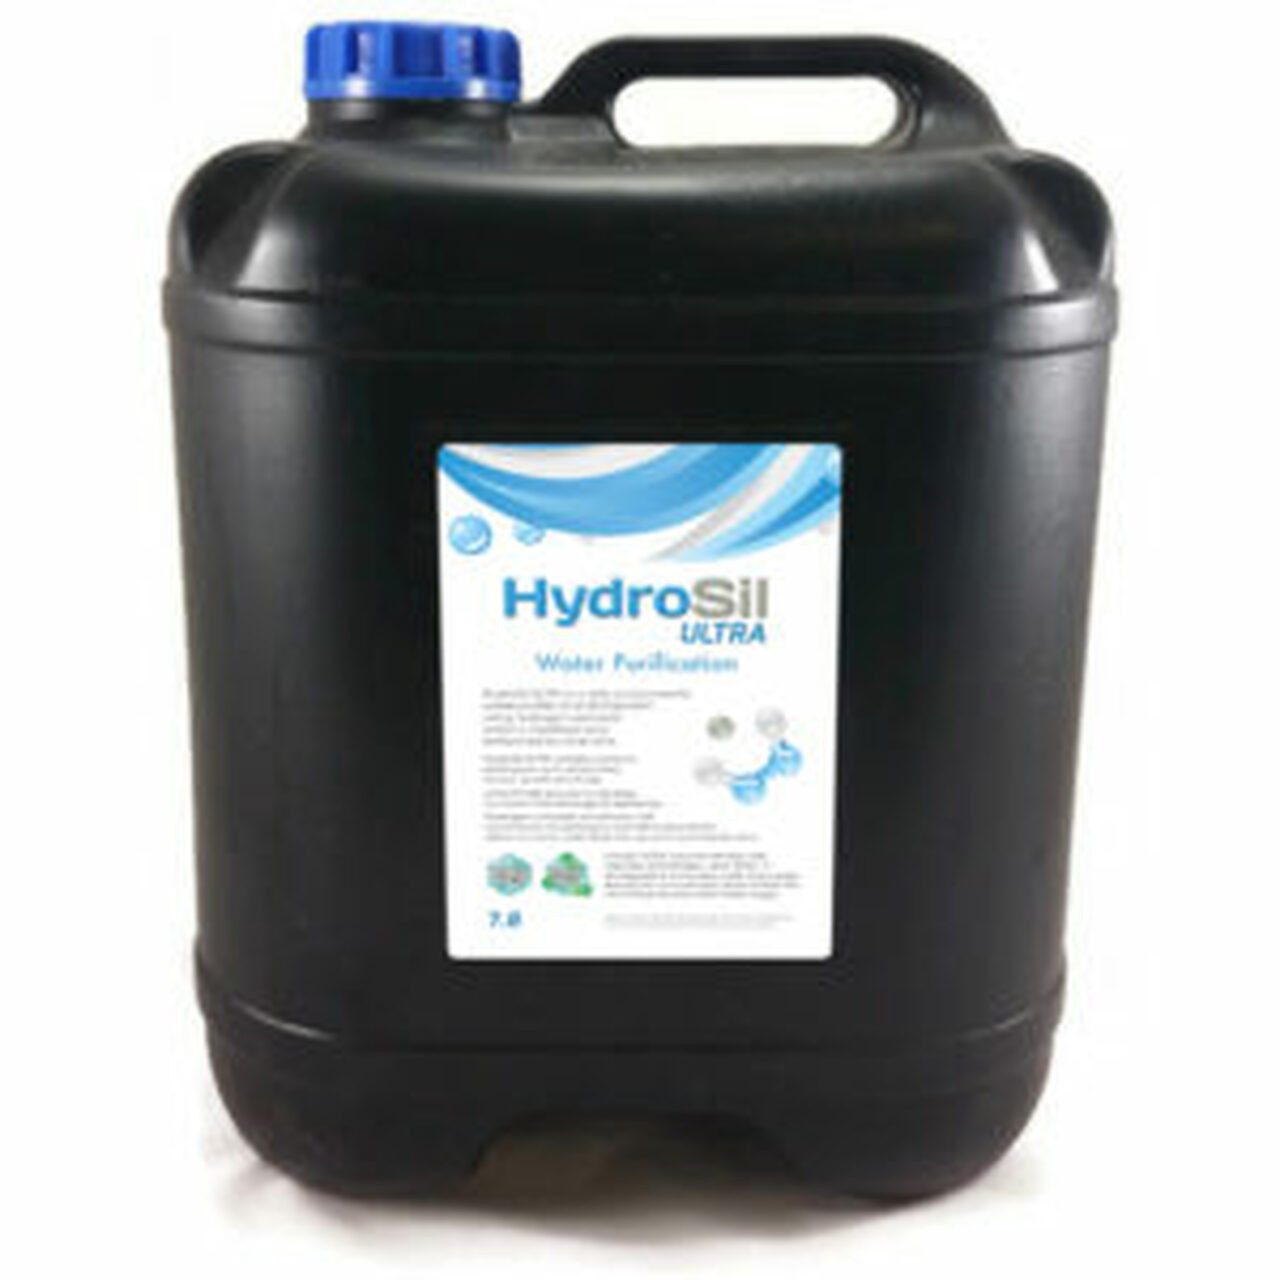 Hydrosil 7.5% x 20 litre drum